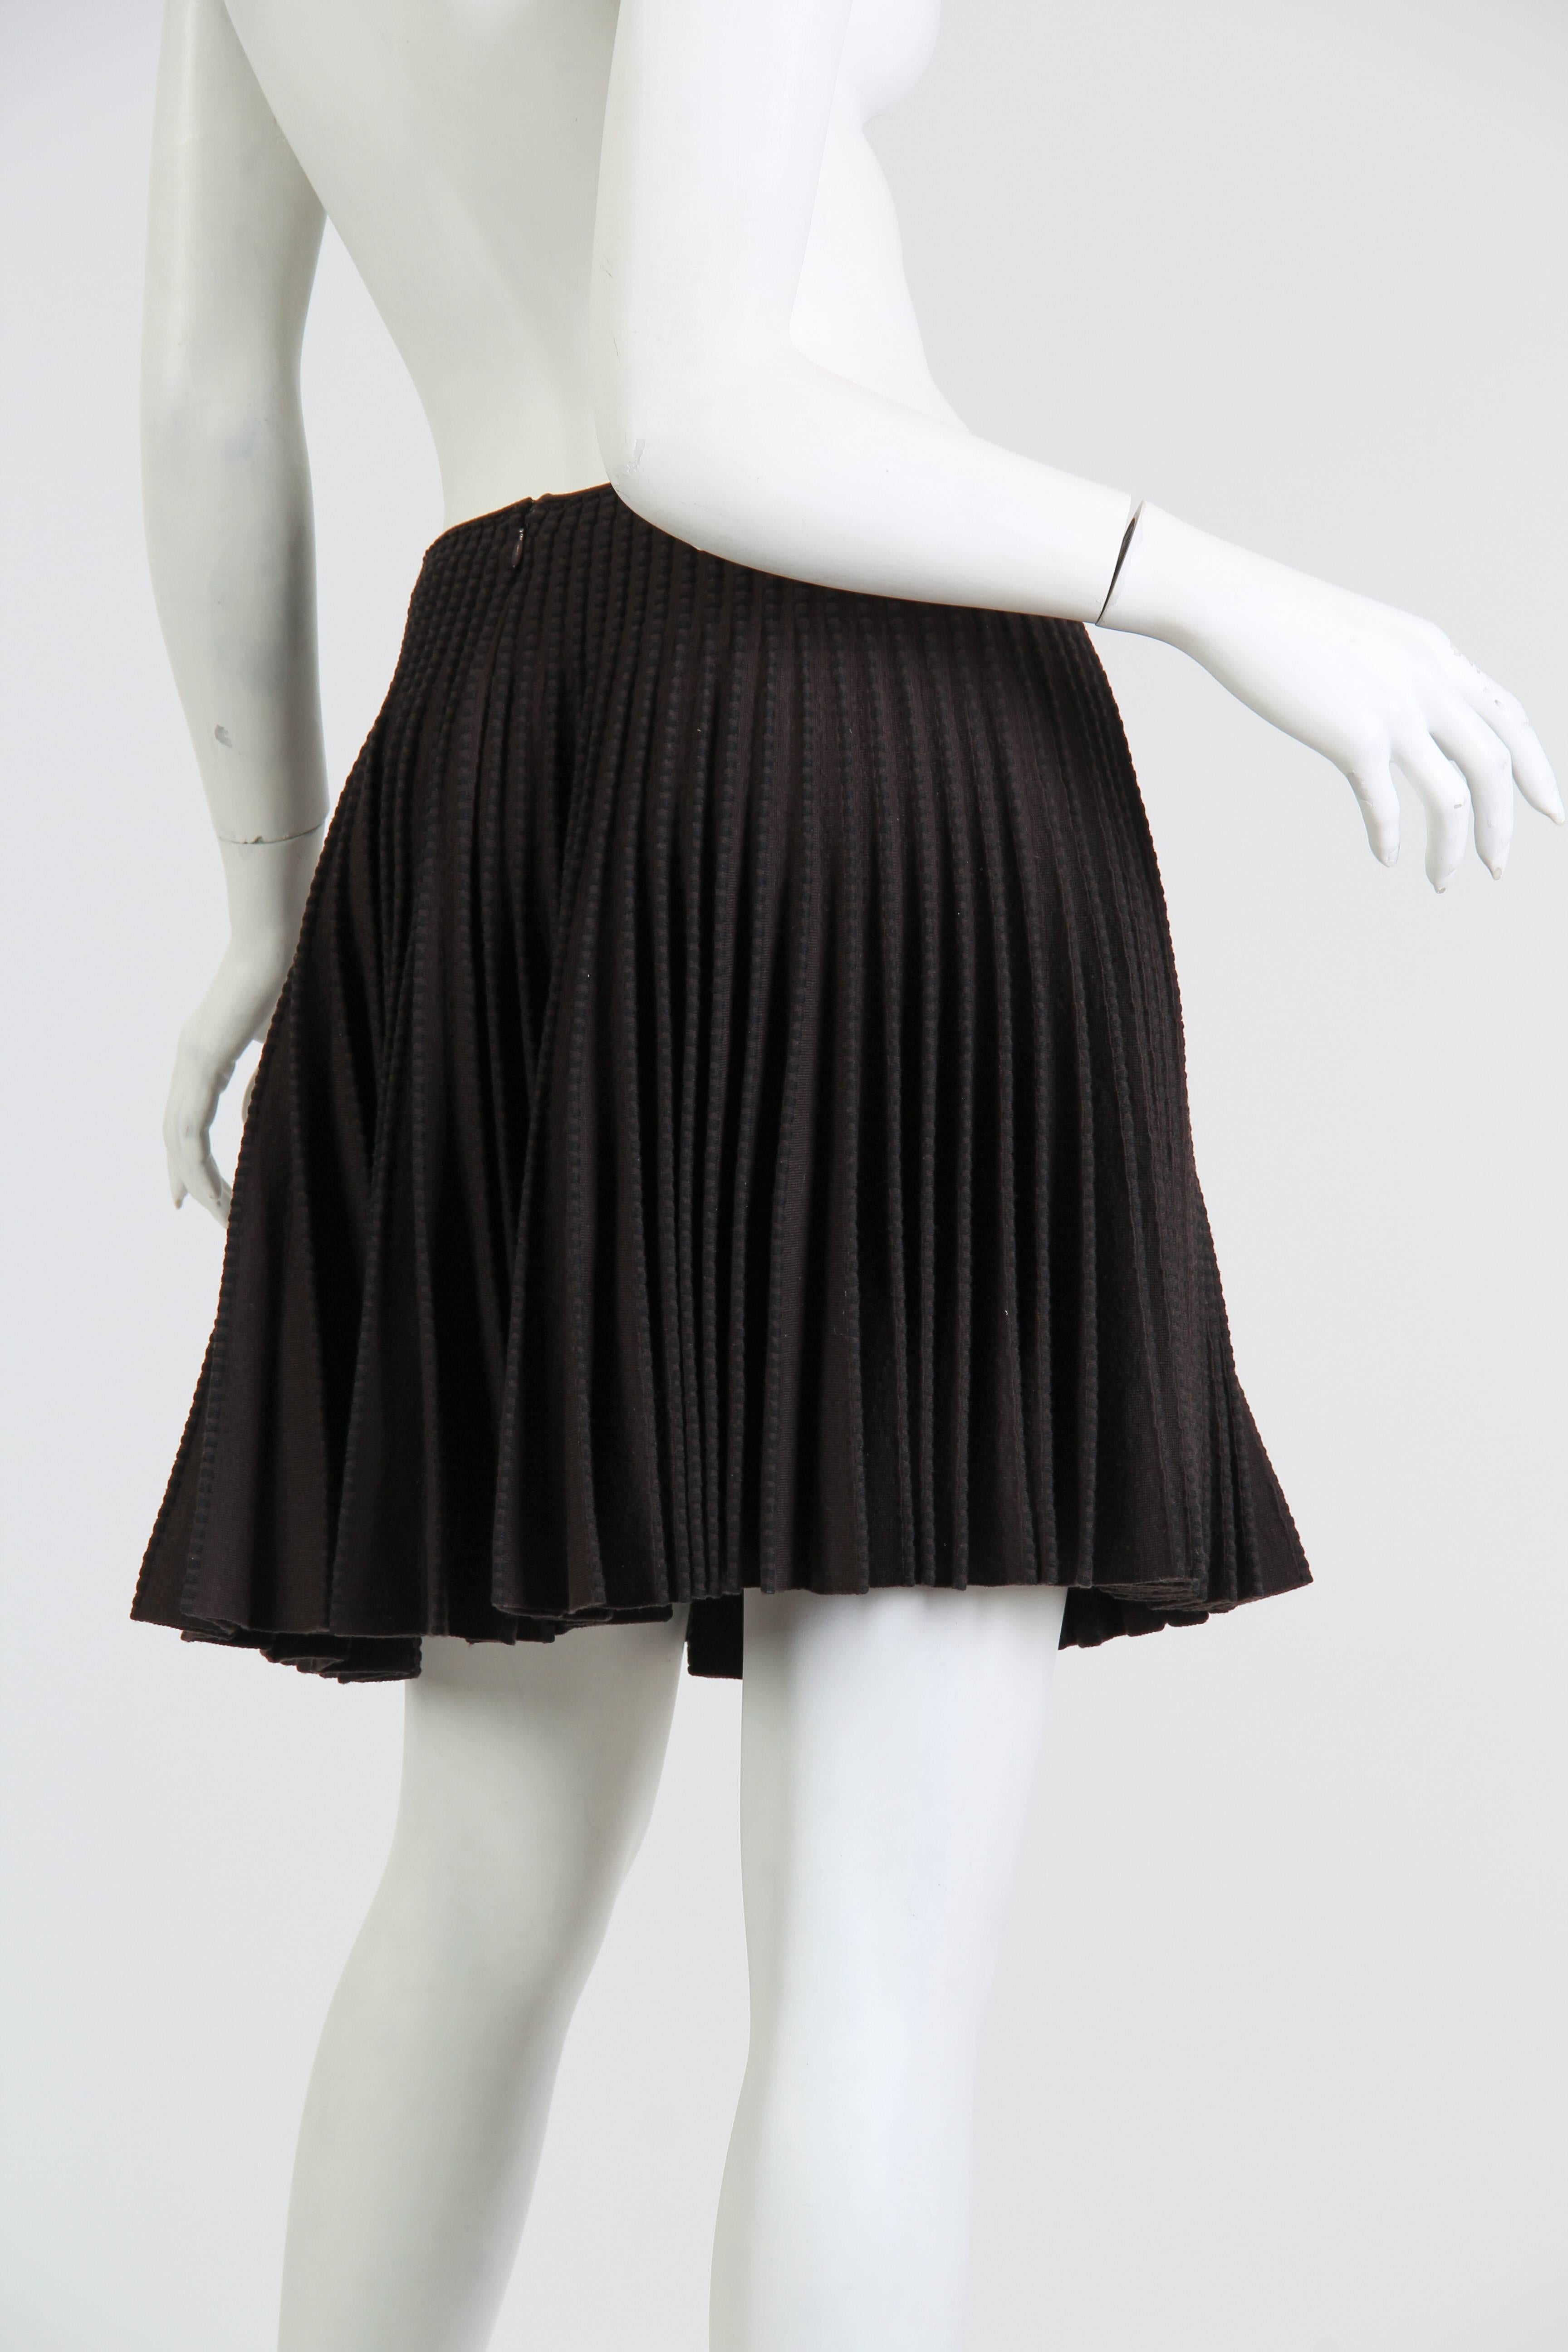 Women's 1990S AZZEDINE ALAIA Chocolate Brown & Black Rayon Blend Knit Ra-Ra Skirt